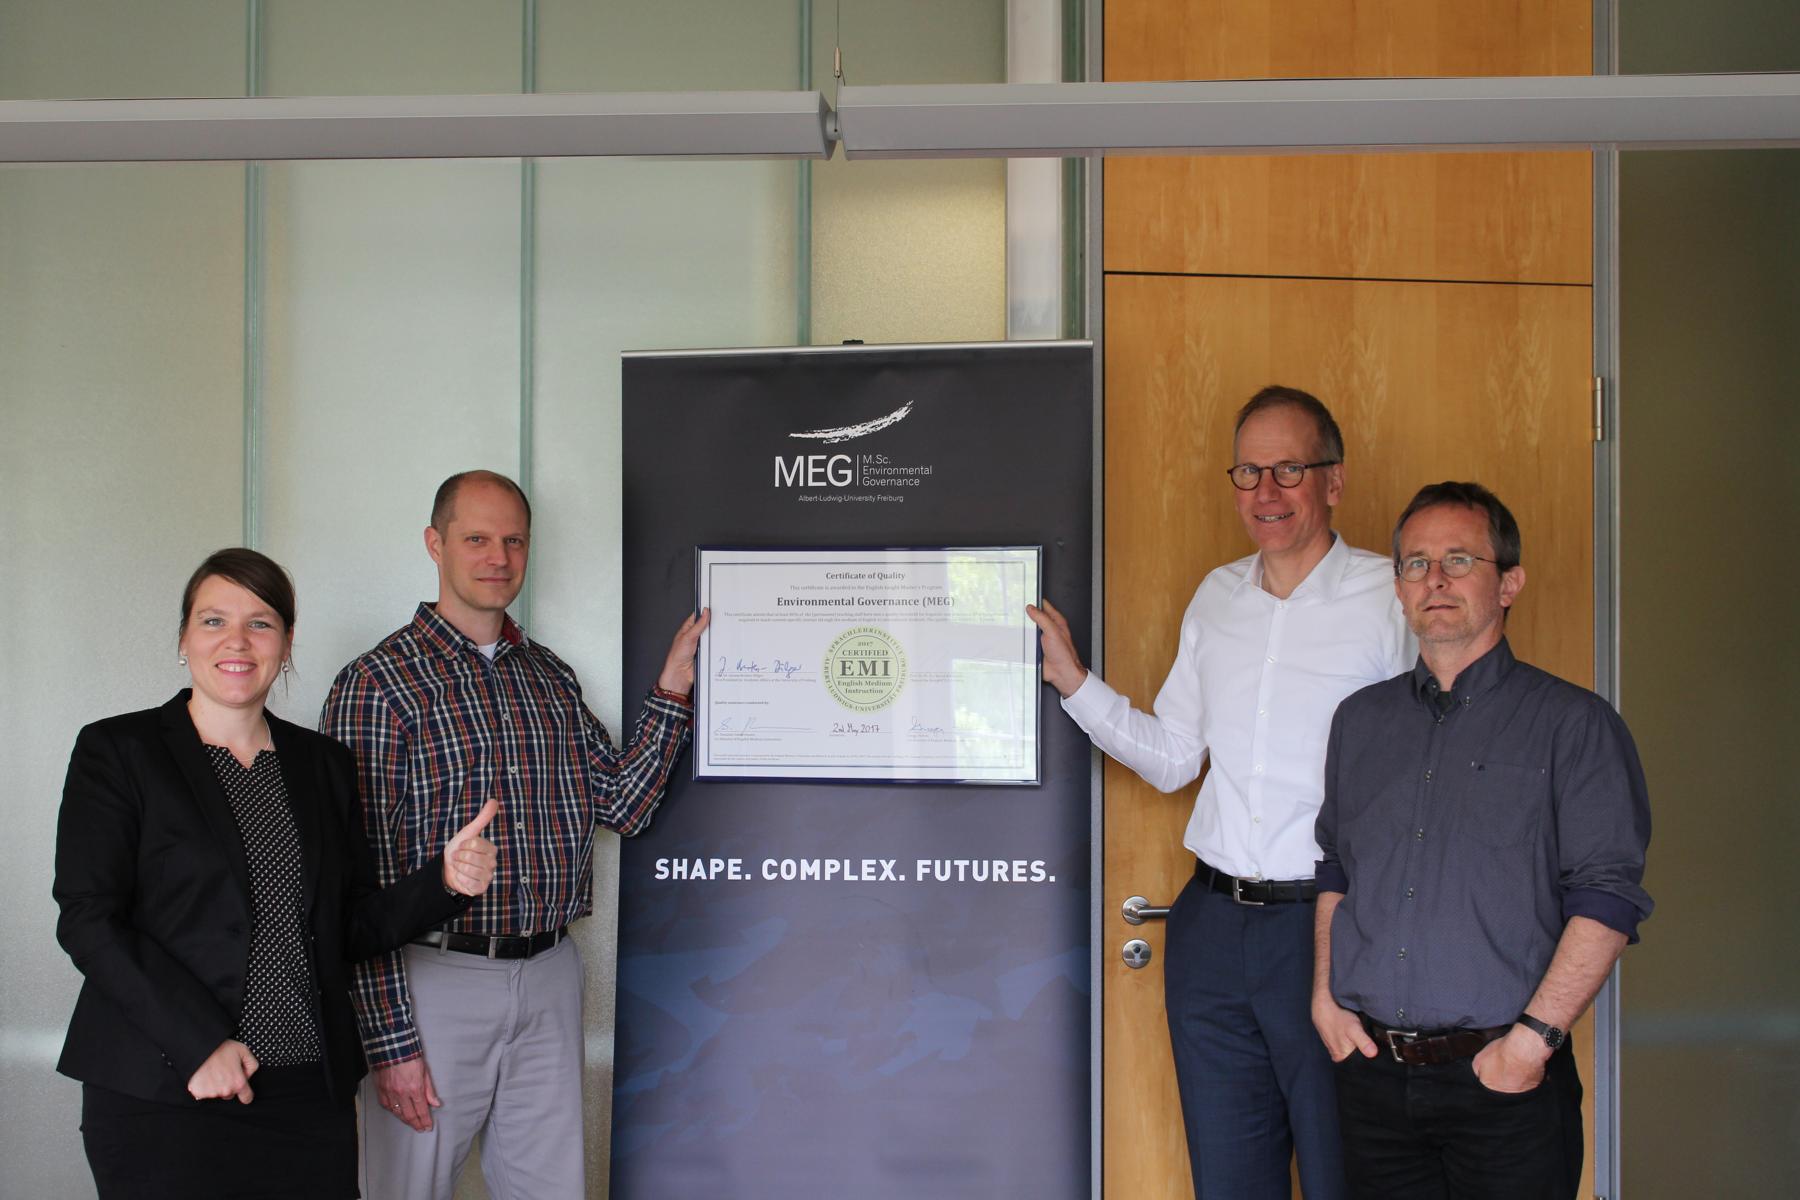 The M.Sc. -programme "Environmental Governance" receive EMI certification 